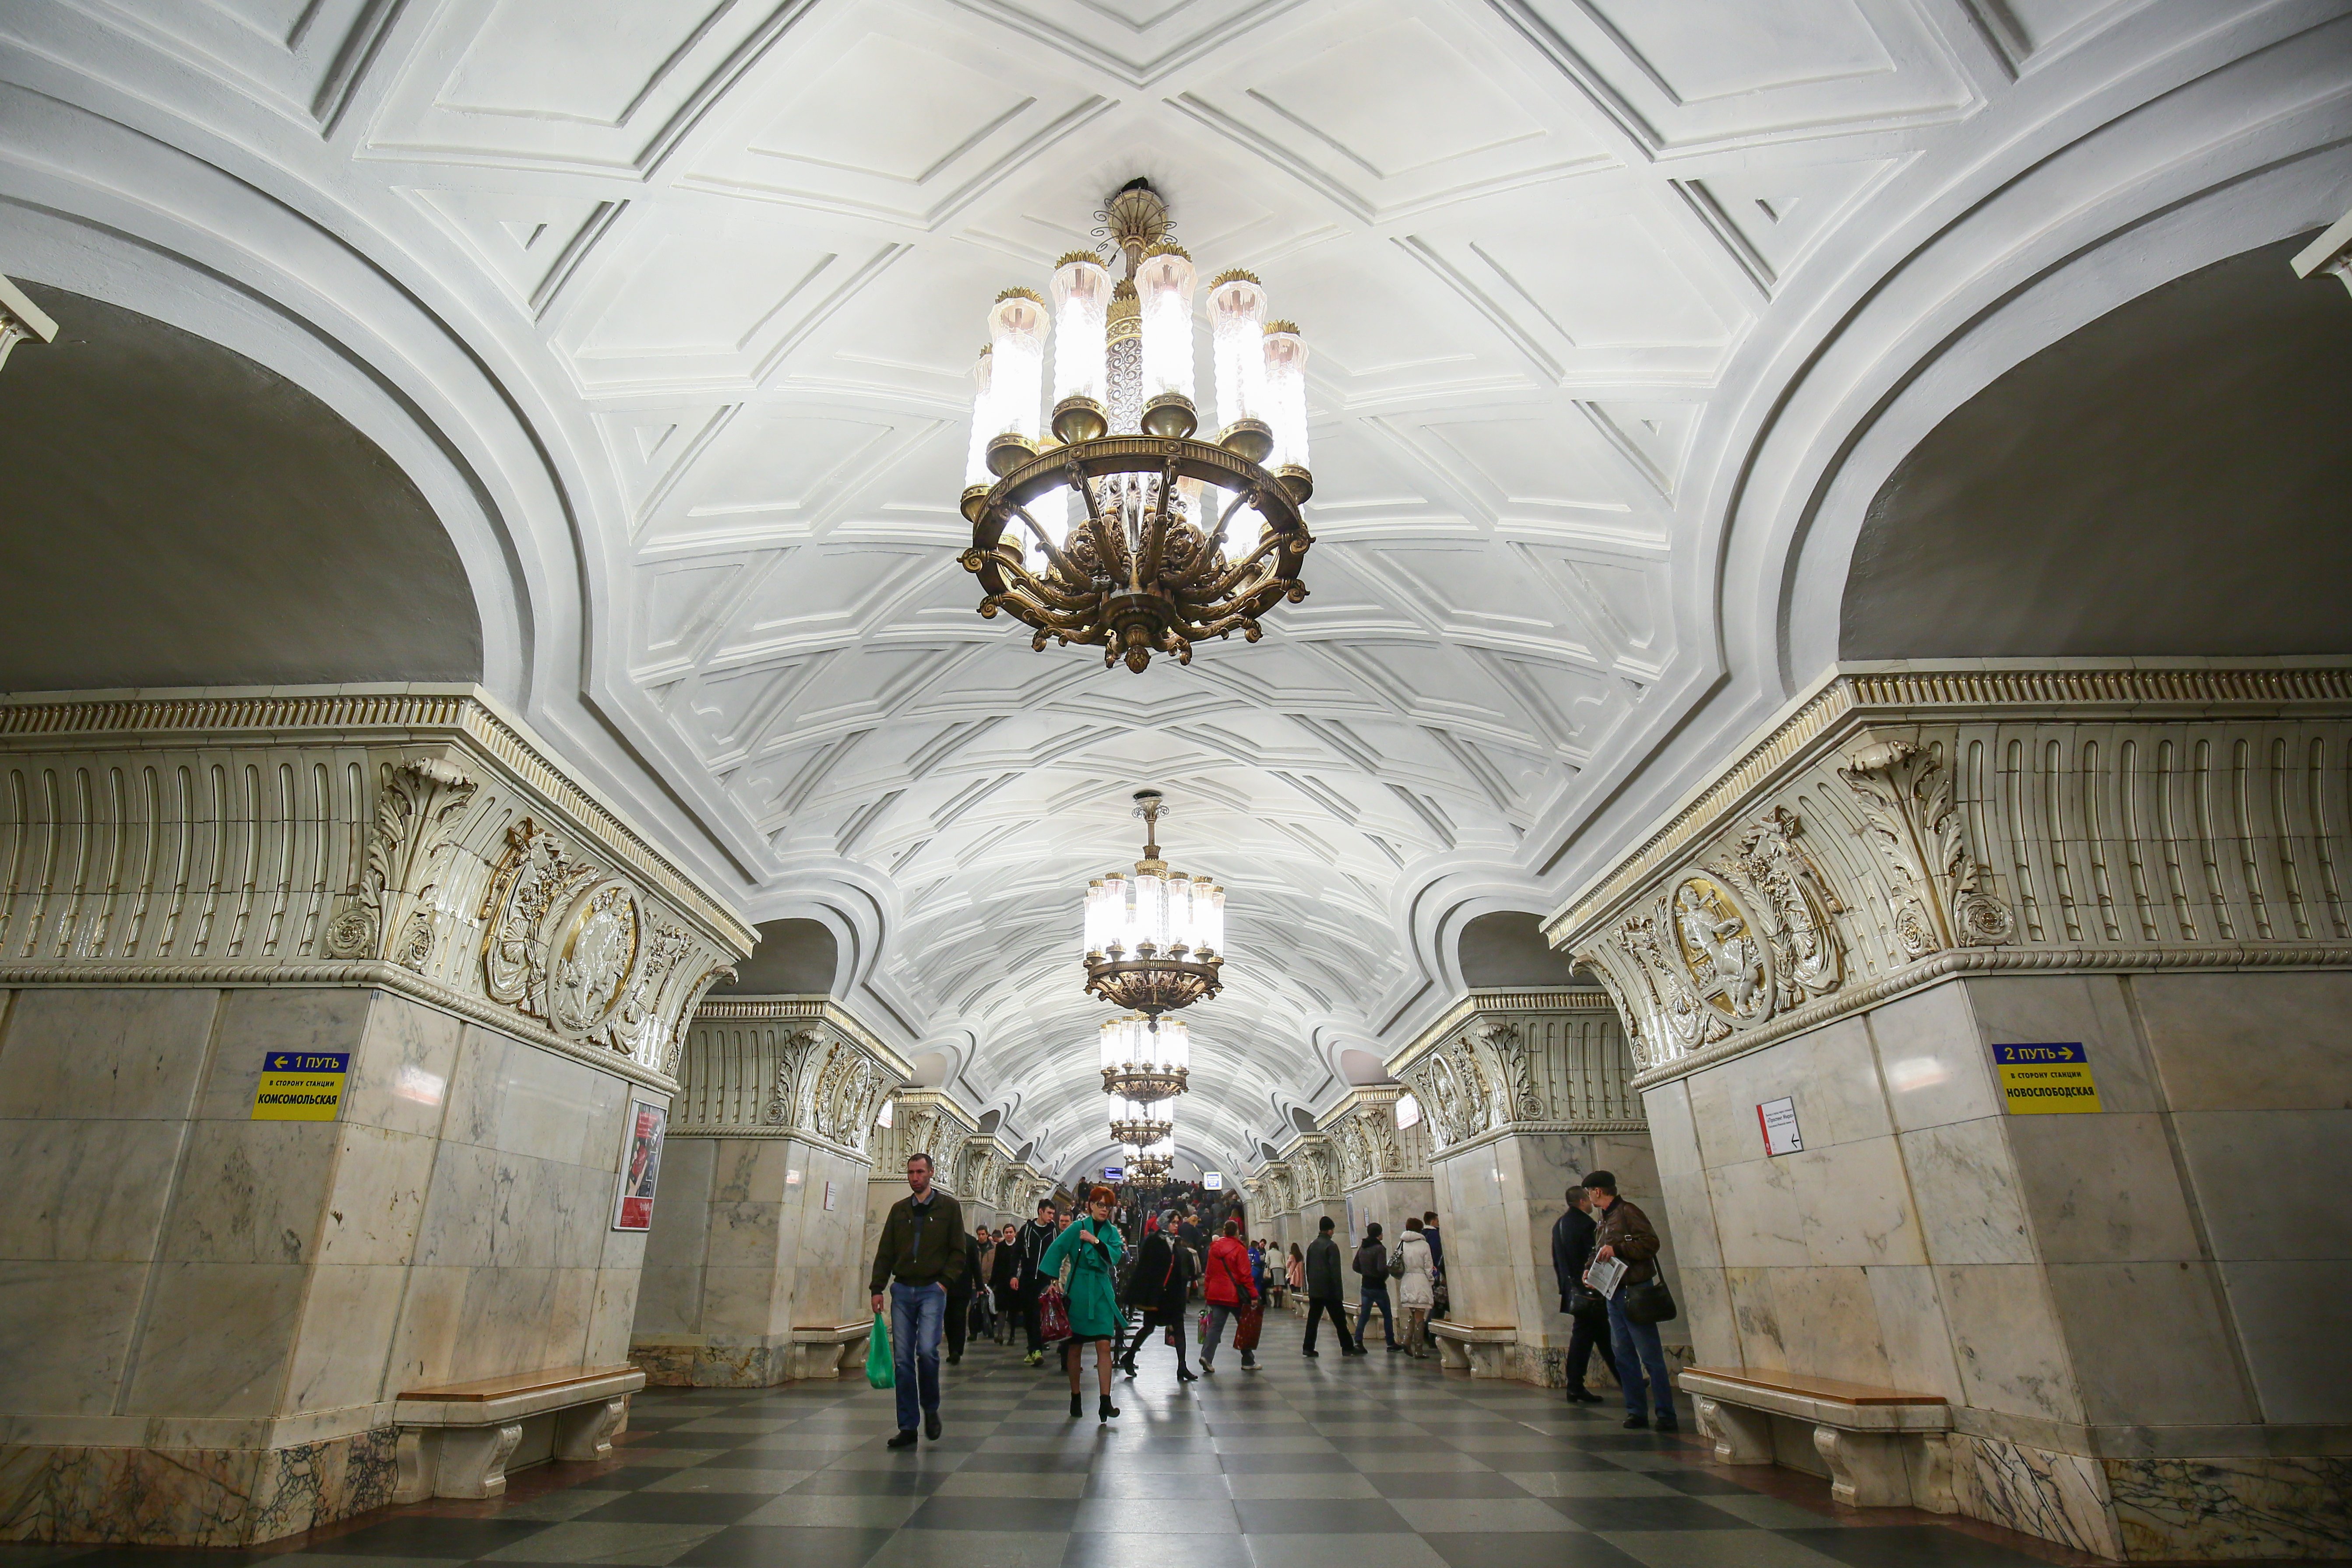 Станция метро "Проспект Мира" (кольцевая)